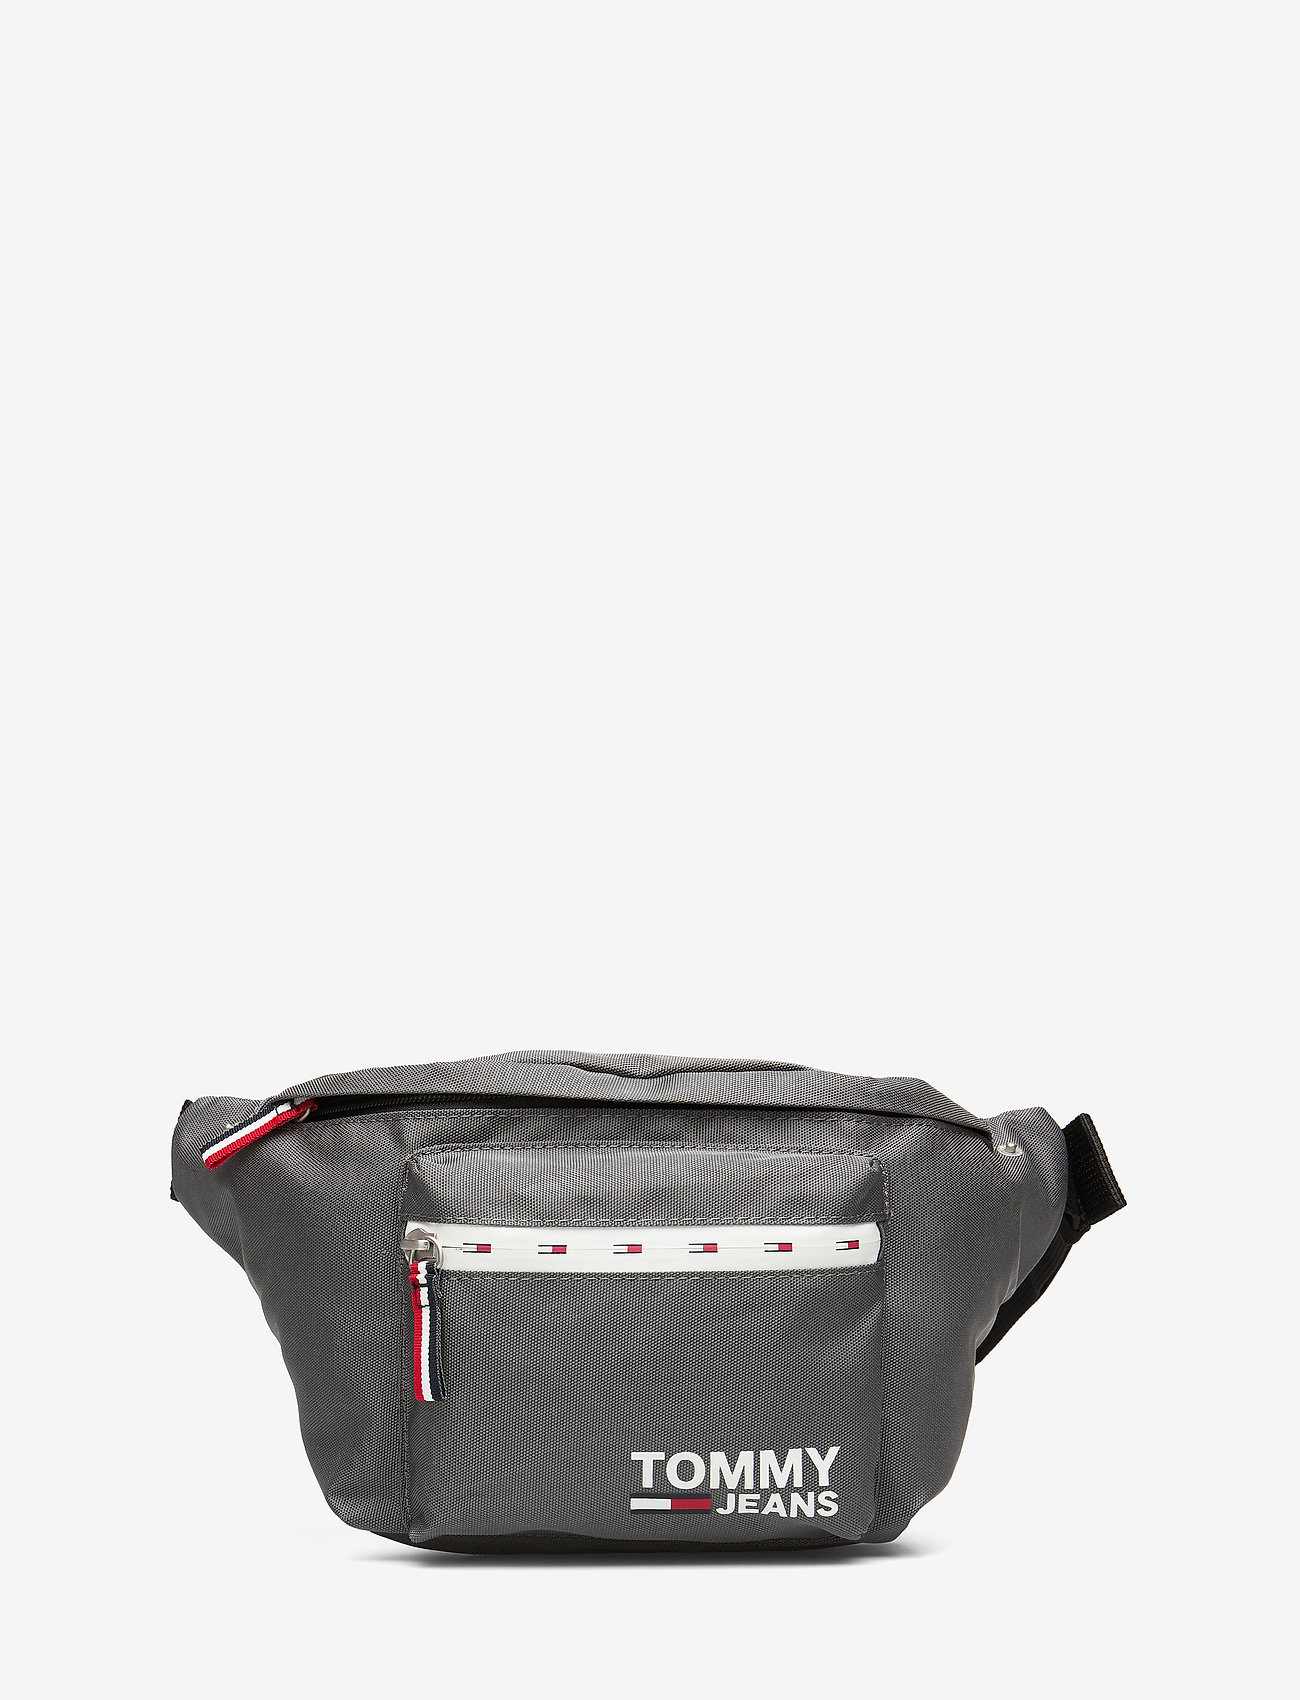 tommy hilfiger bum bag white